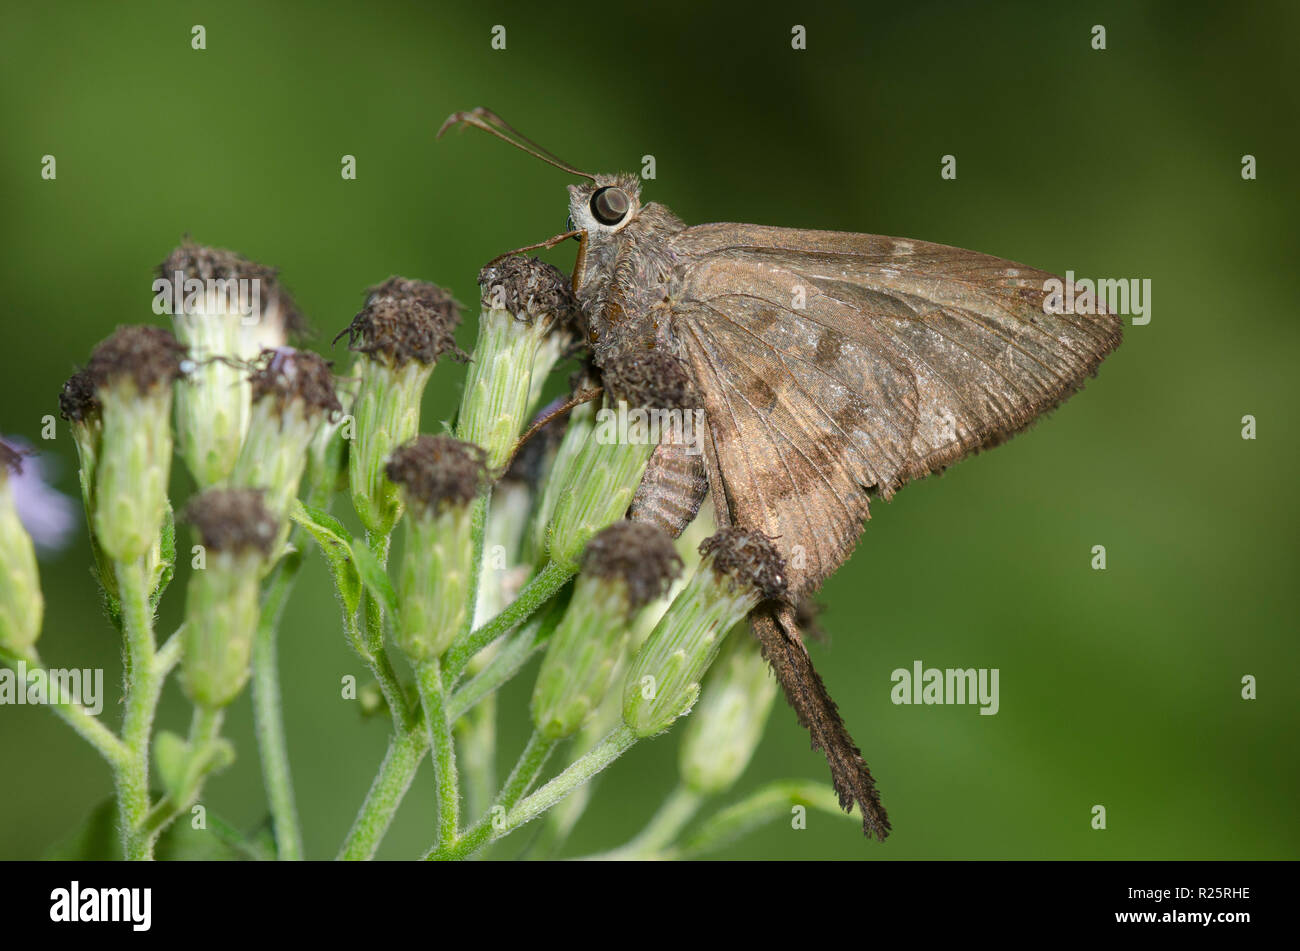 Brown Longtail, Spicauda procne Stock Photo